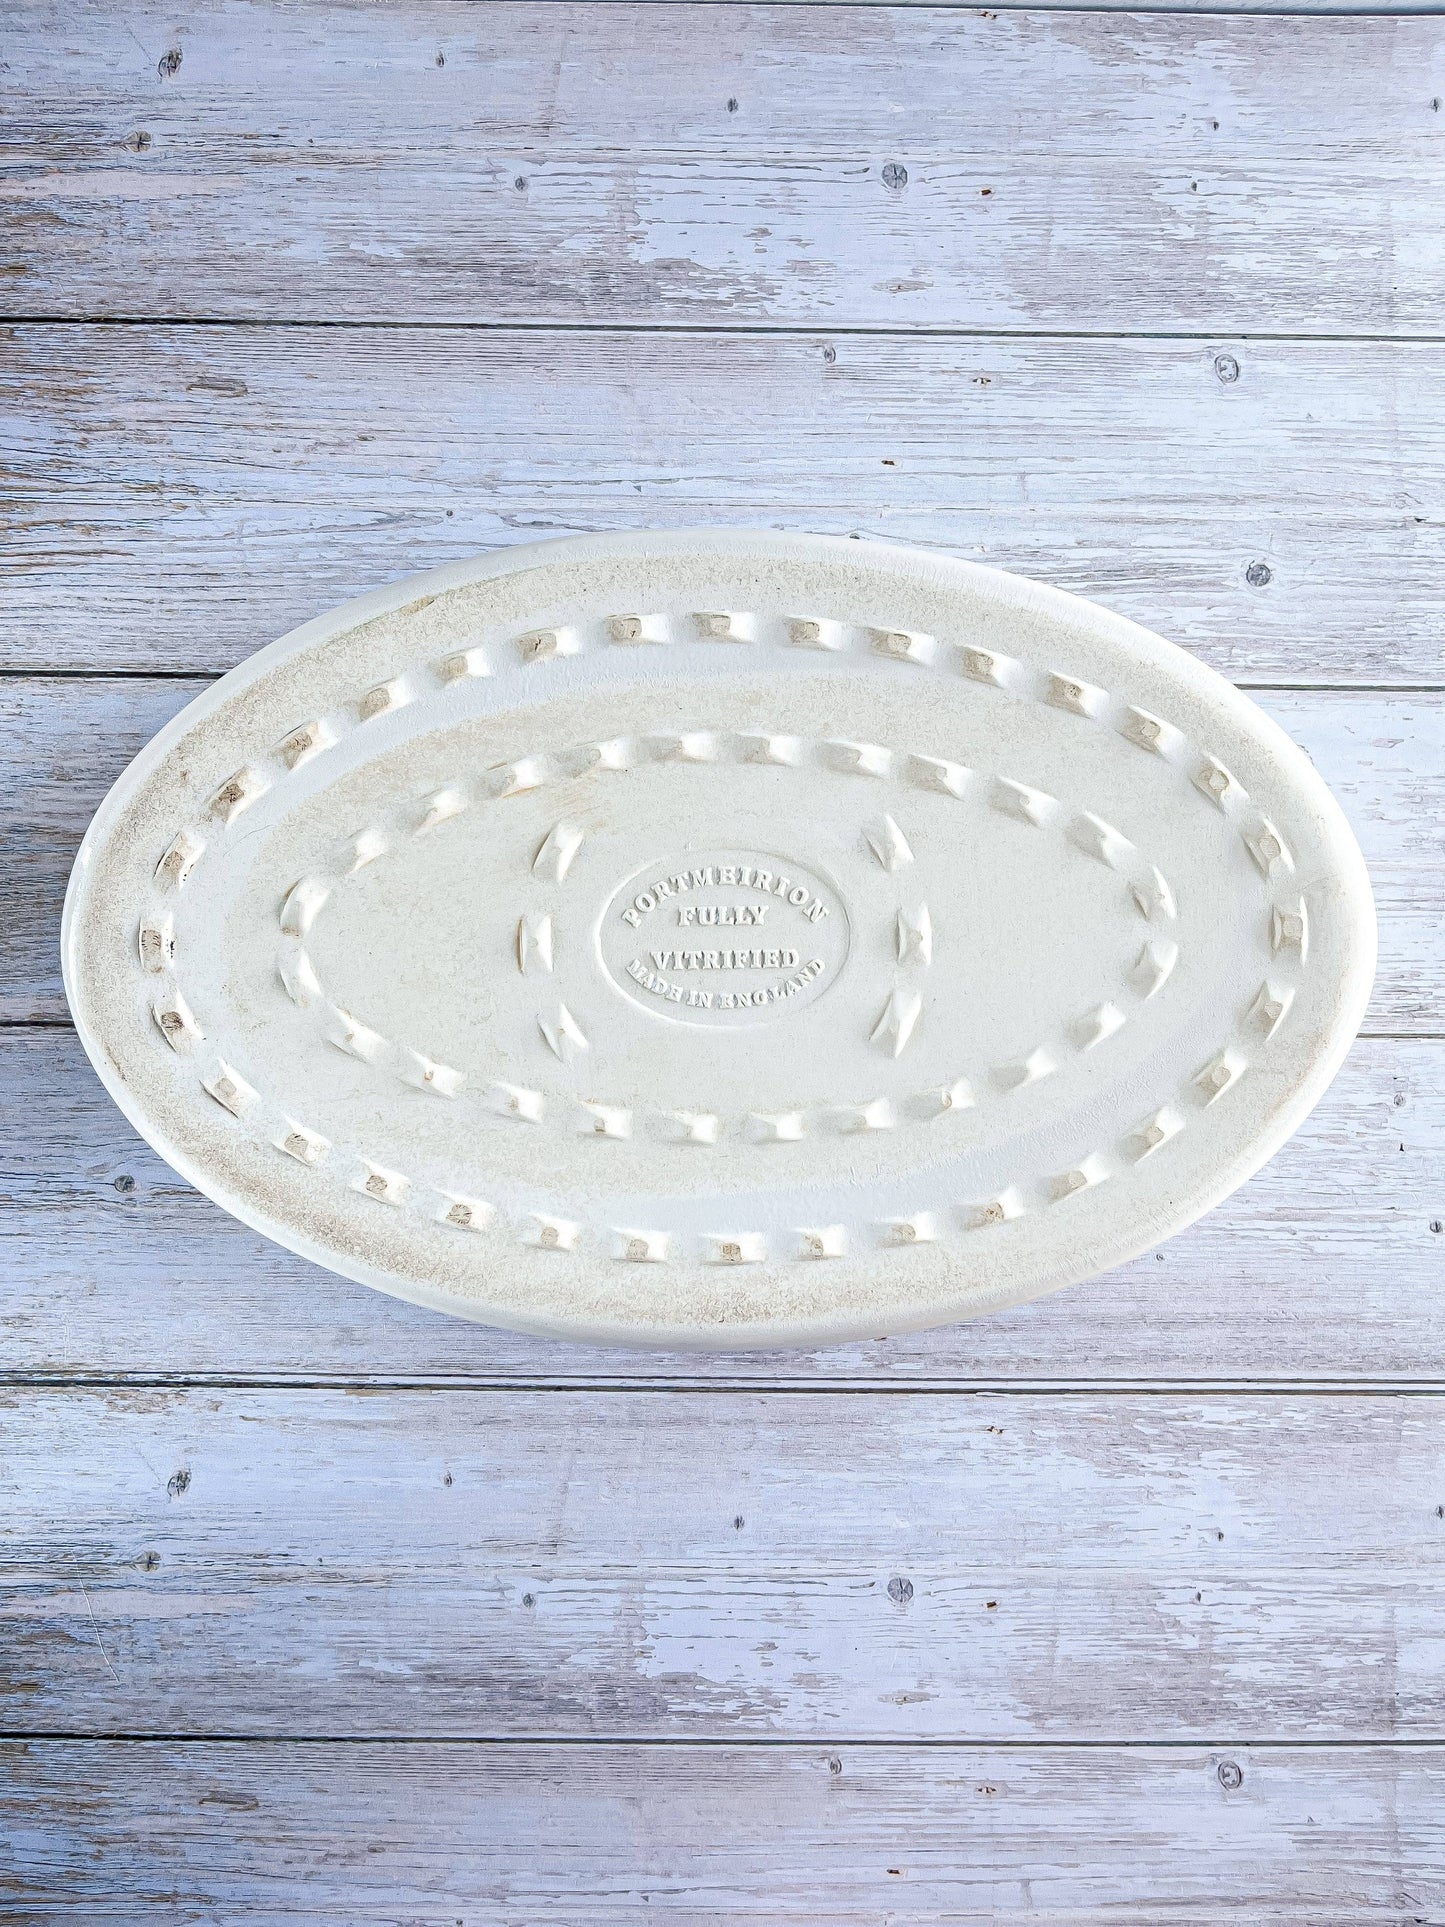 Portmeirion Botanic Garden Oval Baking Dish - ‘Spanish Gum Cistus’ Pattern - SOSC Home